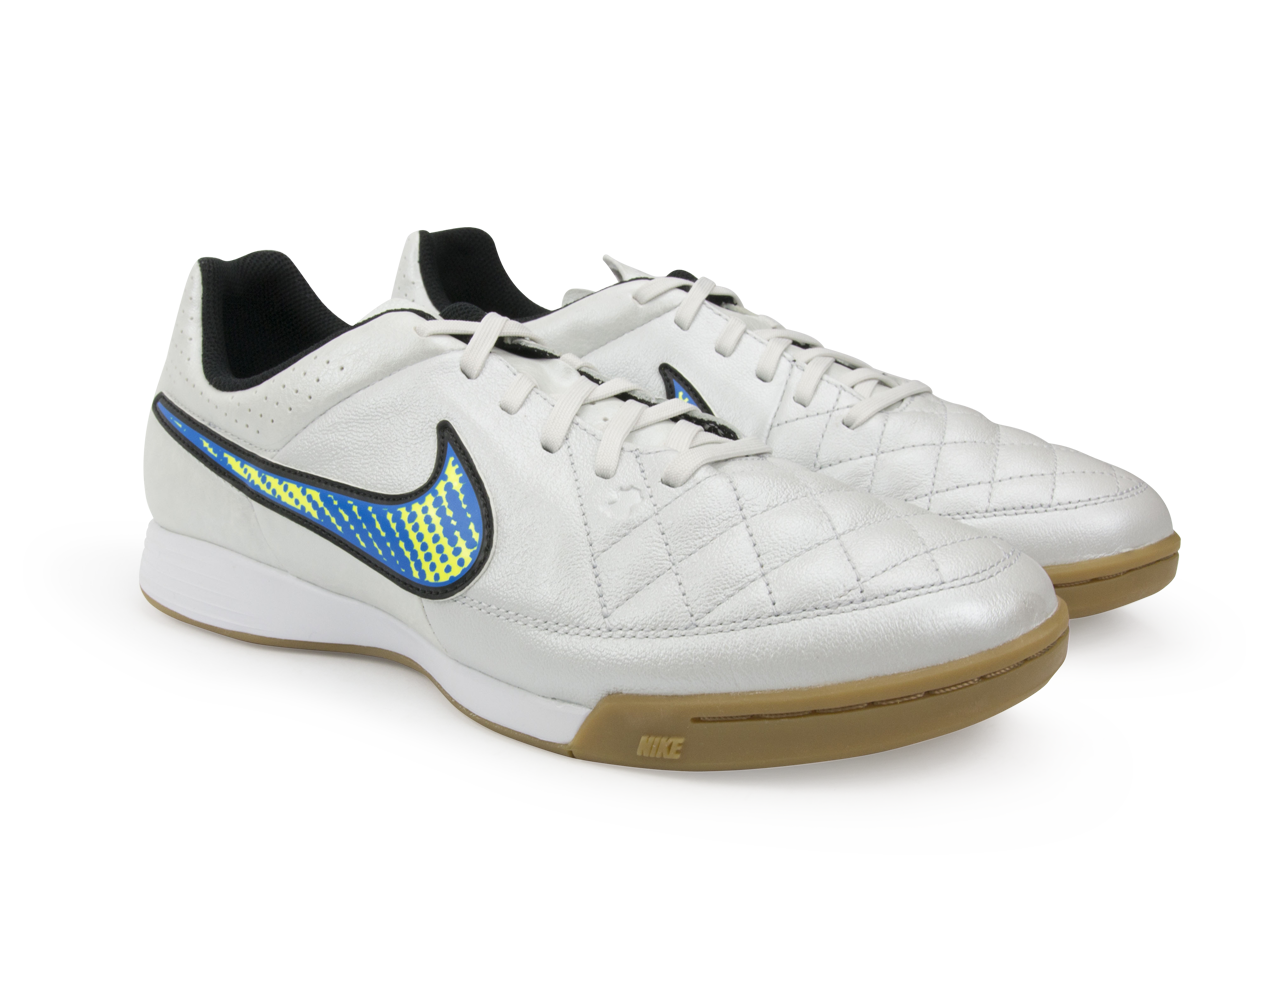 Nike Men's Tiempo Genio Leather Indoor Soccer Shoes White/Volt/Soar/Black